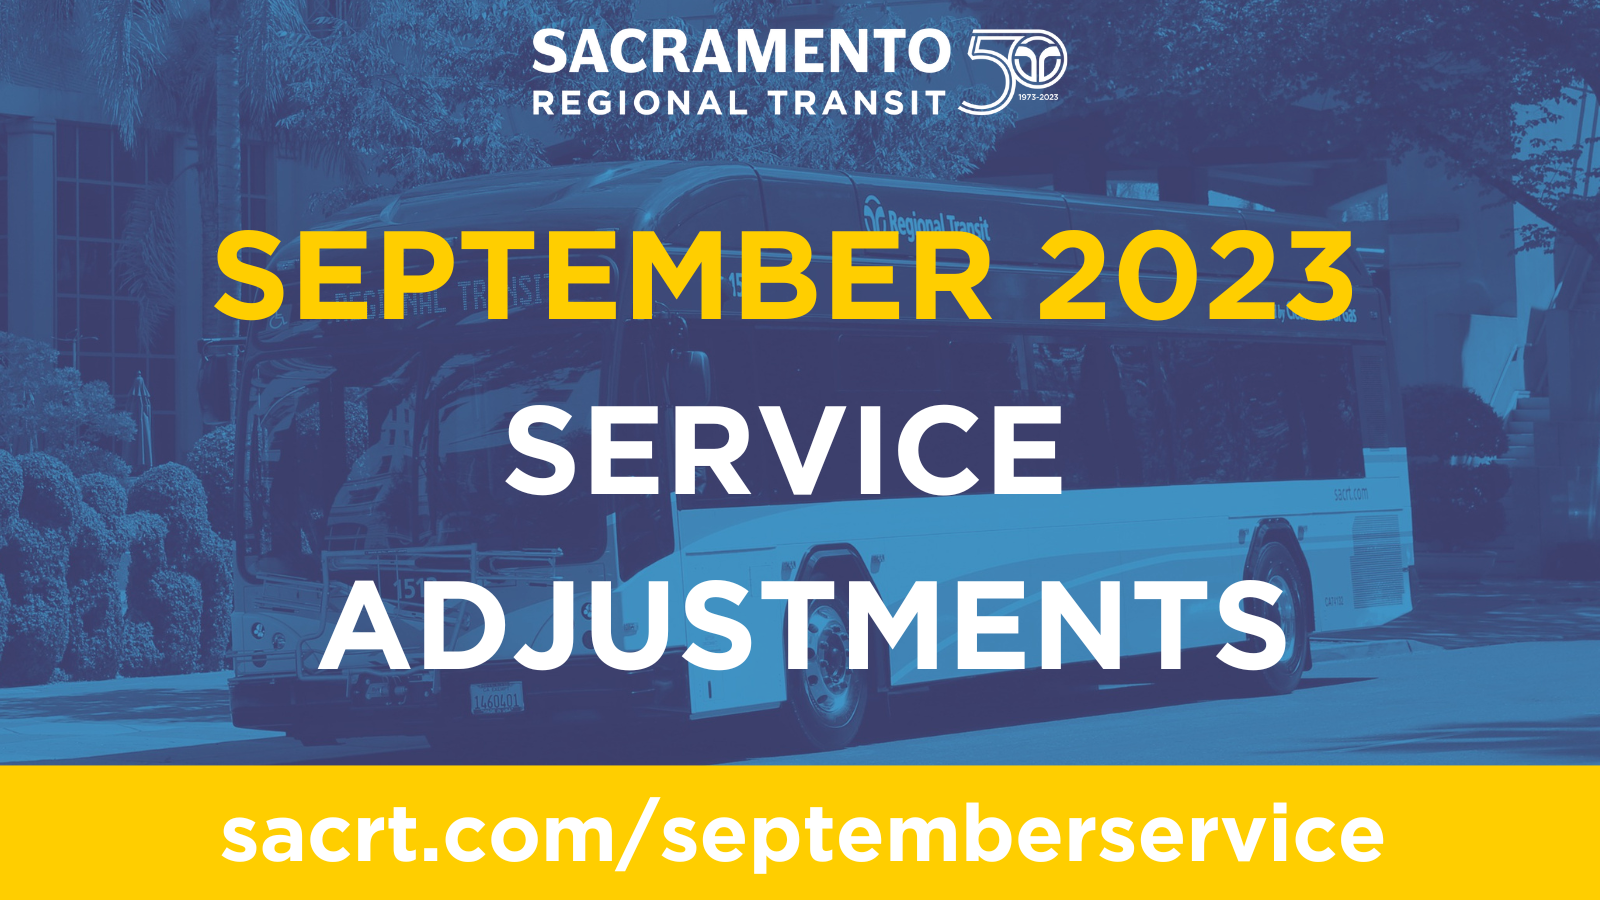 Photo of bus. Text that says september 2023 service adjustments. sacrt.com/septemberservice.